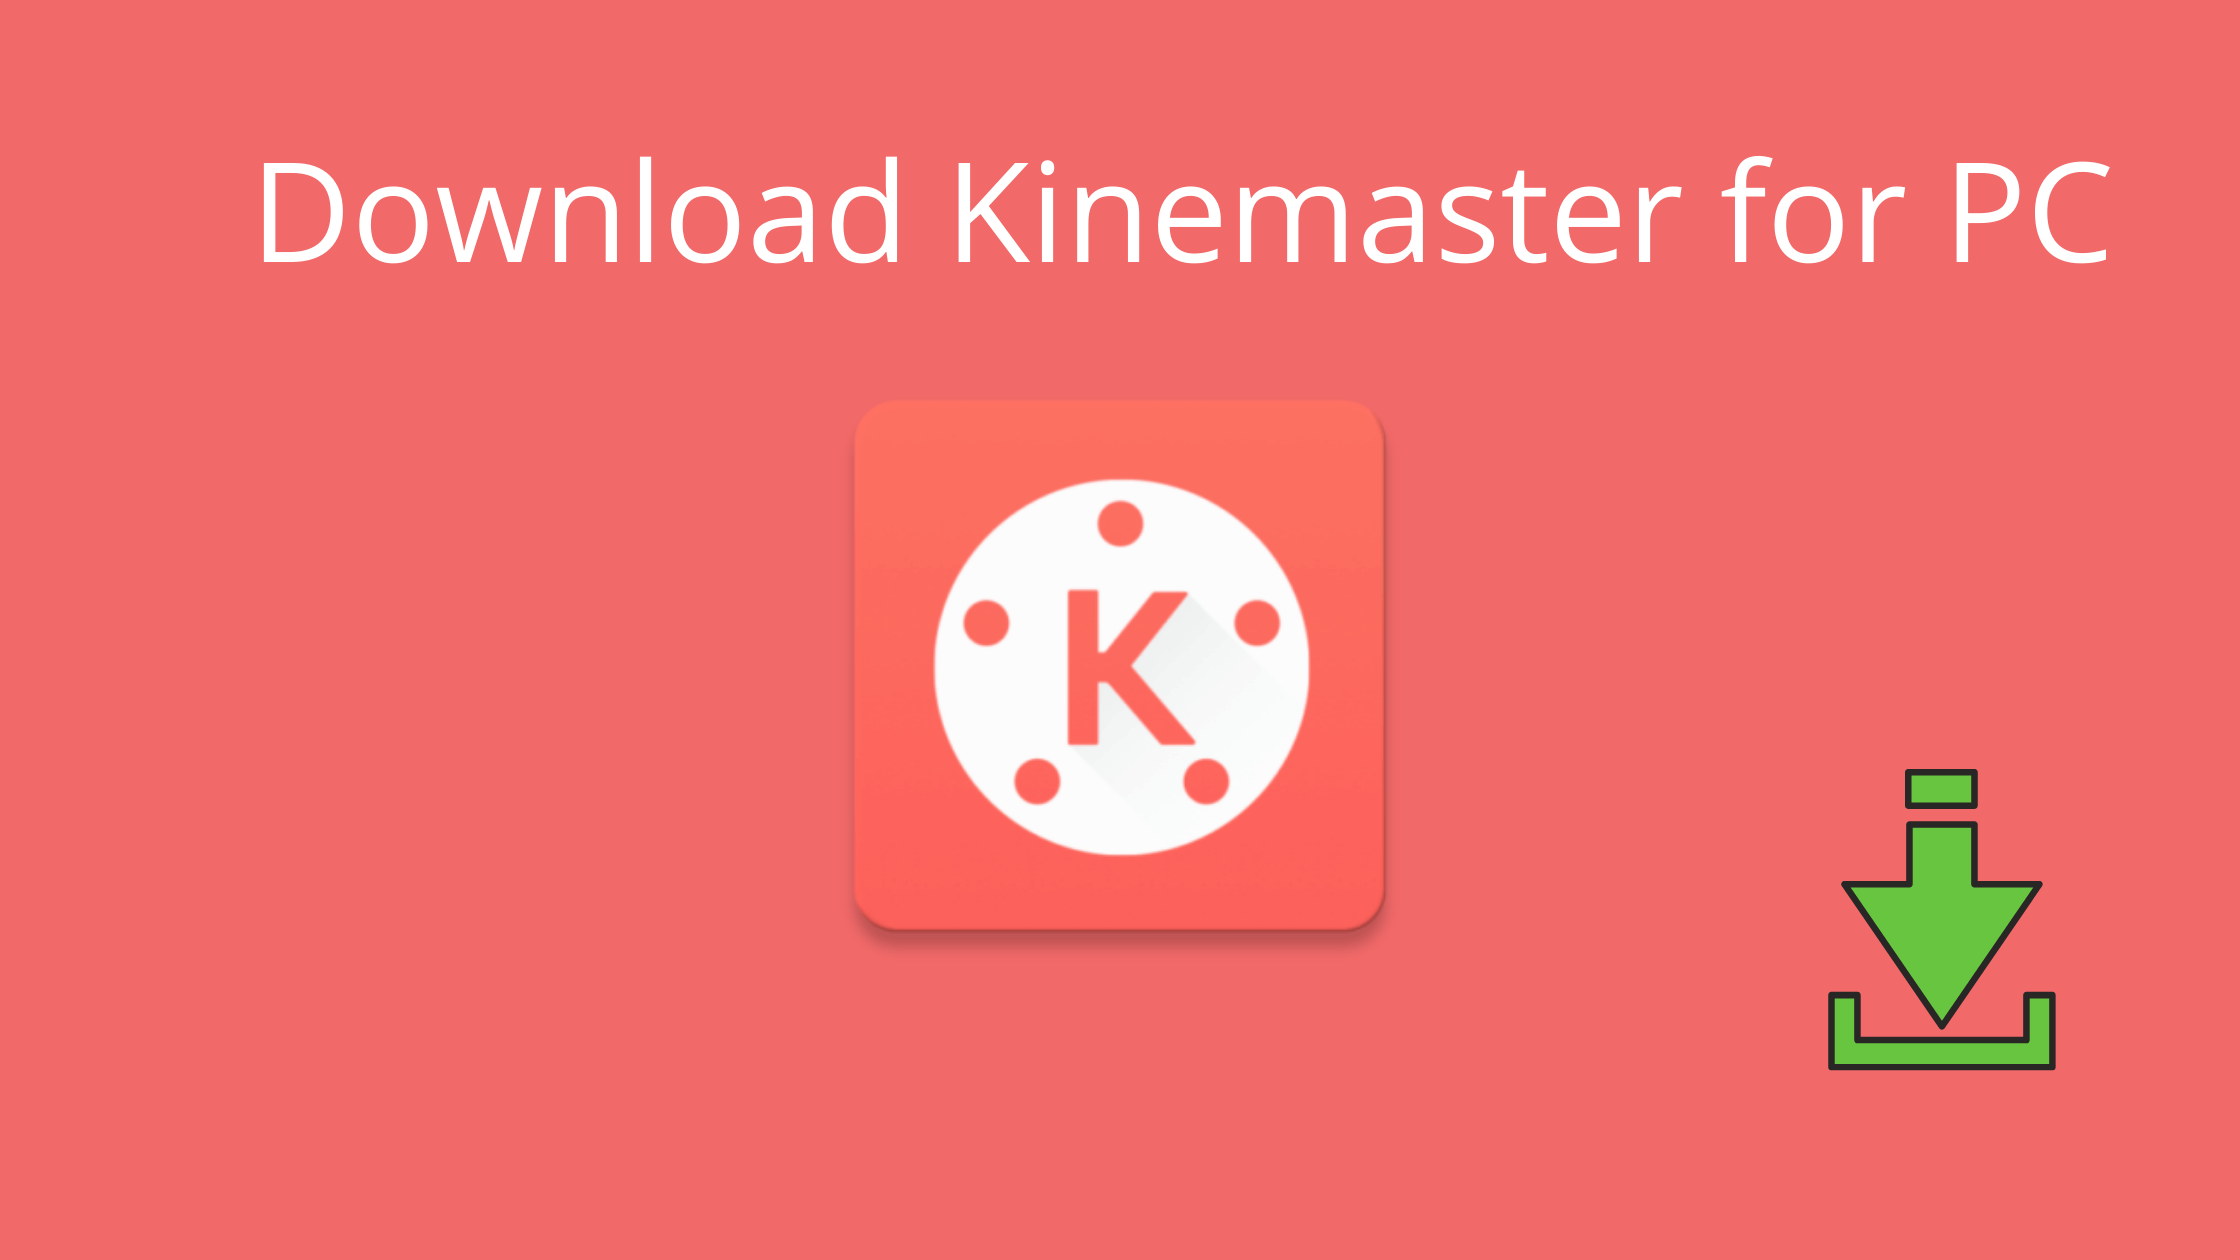 kinemaster for laptop windows 10 download